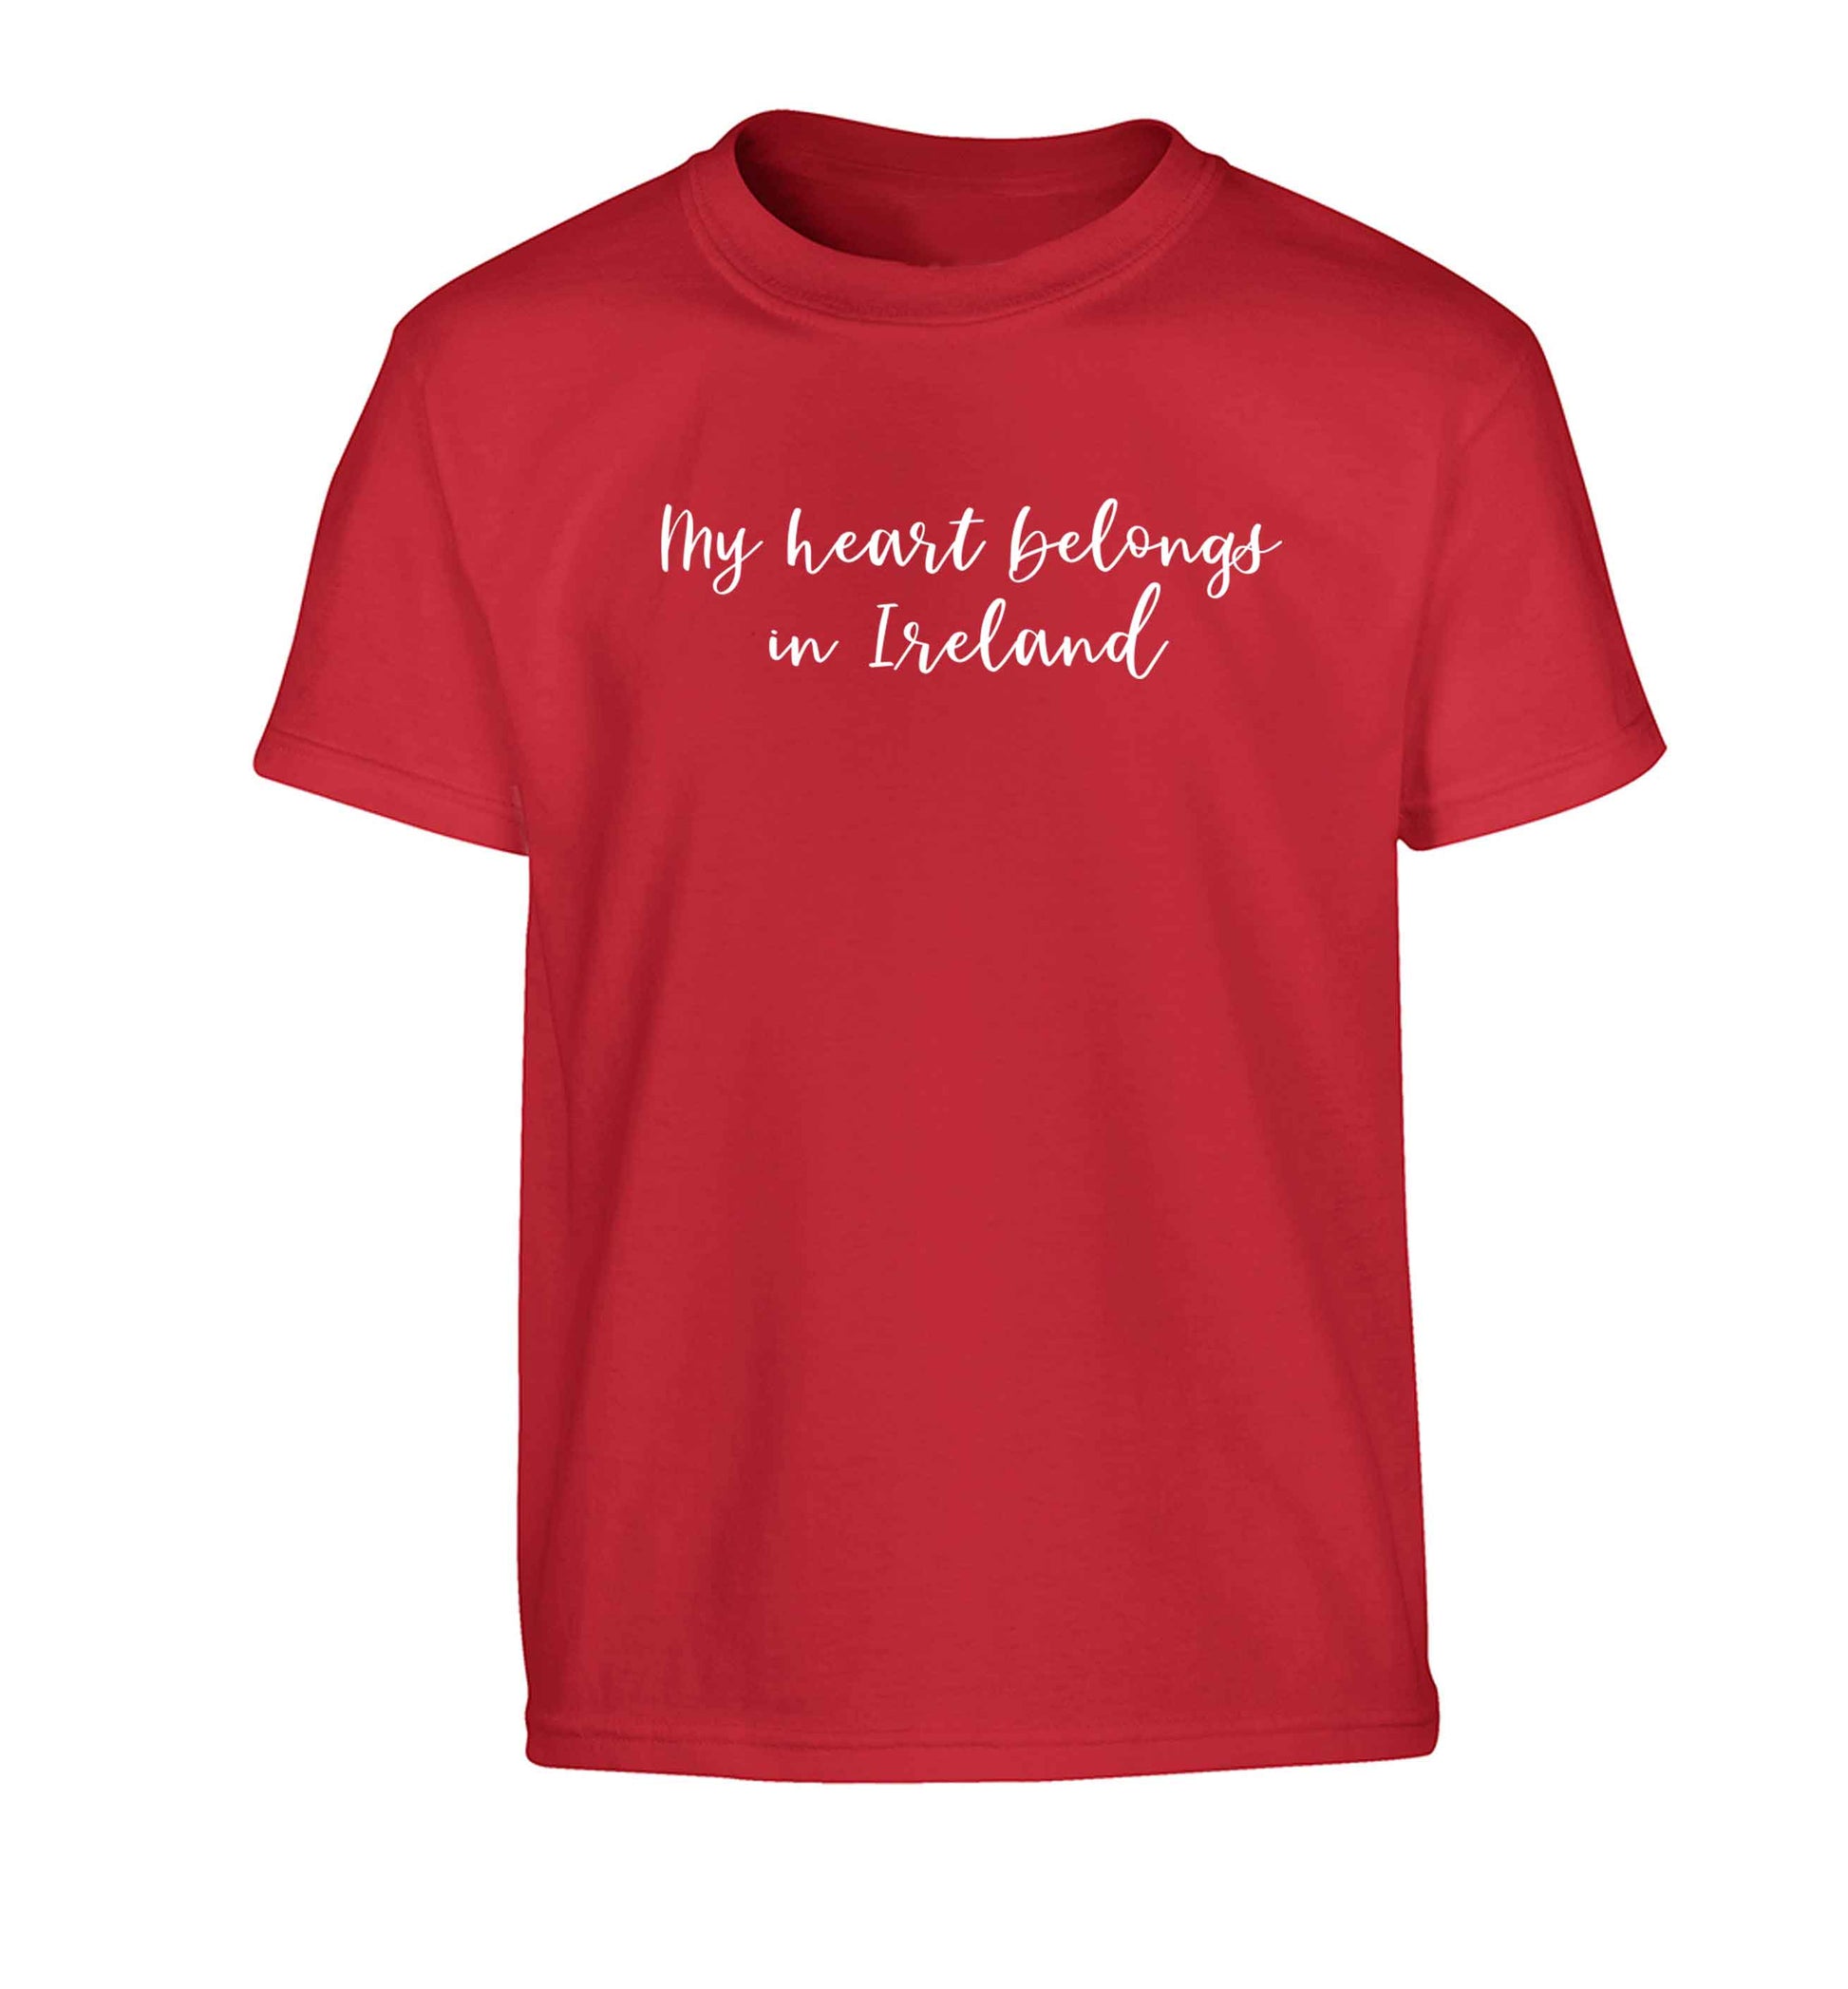 My heart belongs in Ireland Children's red Tshirt 12-13 Years